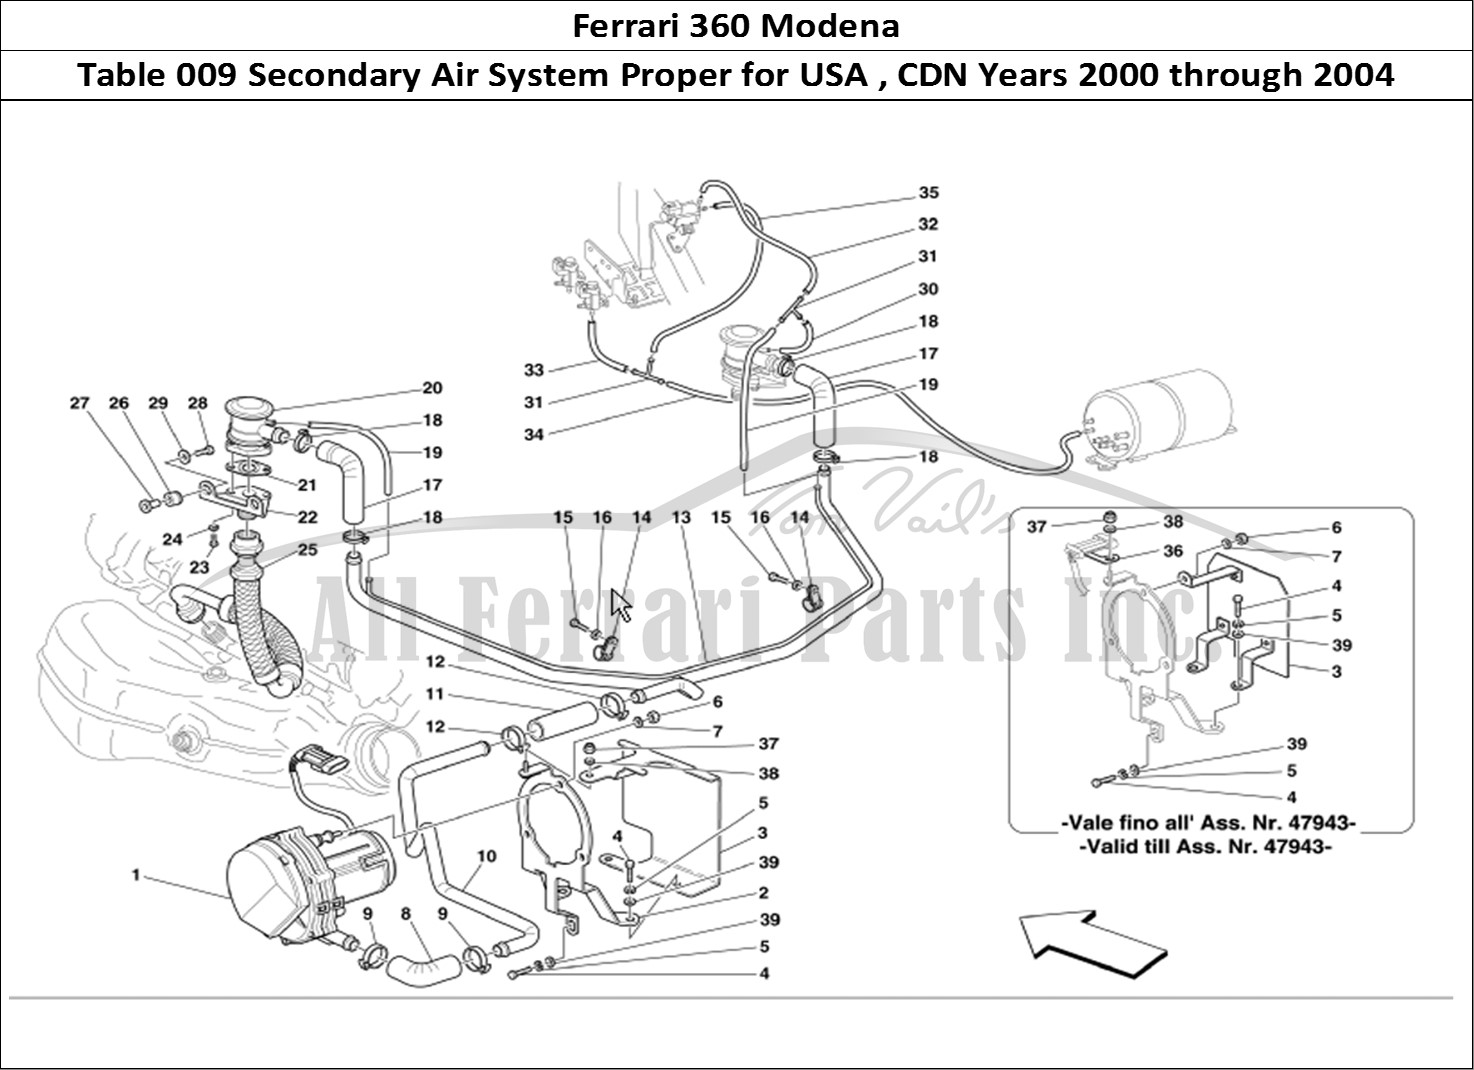 Ferrari Parts Ferrari 360 Modena Page 009 Secondary Air System -Val